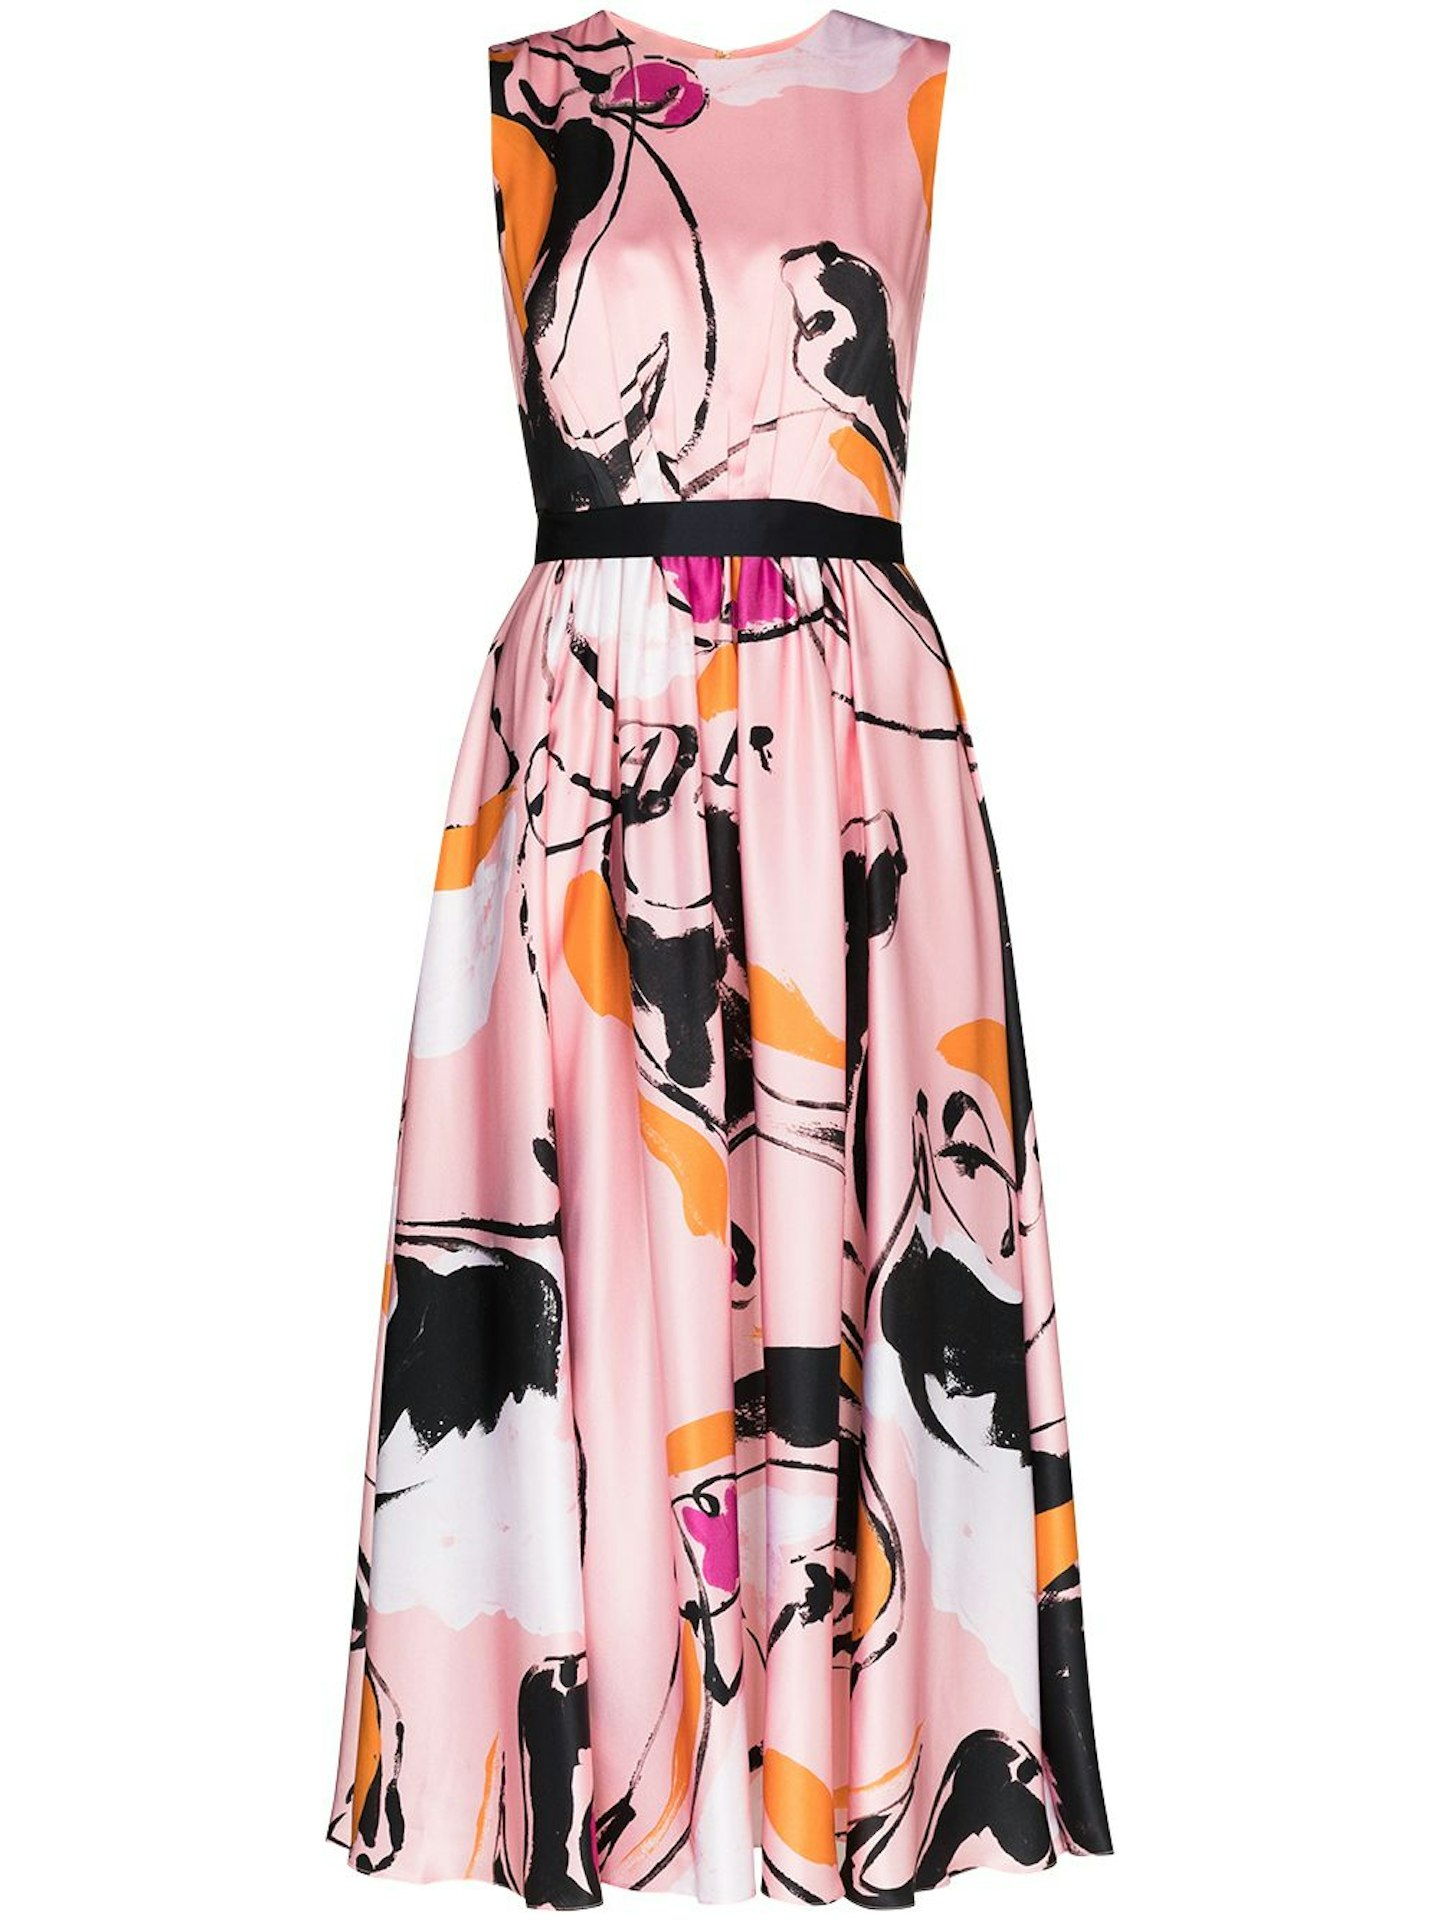 Roksanda, Dance Print Tibi Dress, £1,495